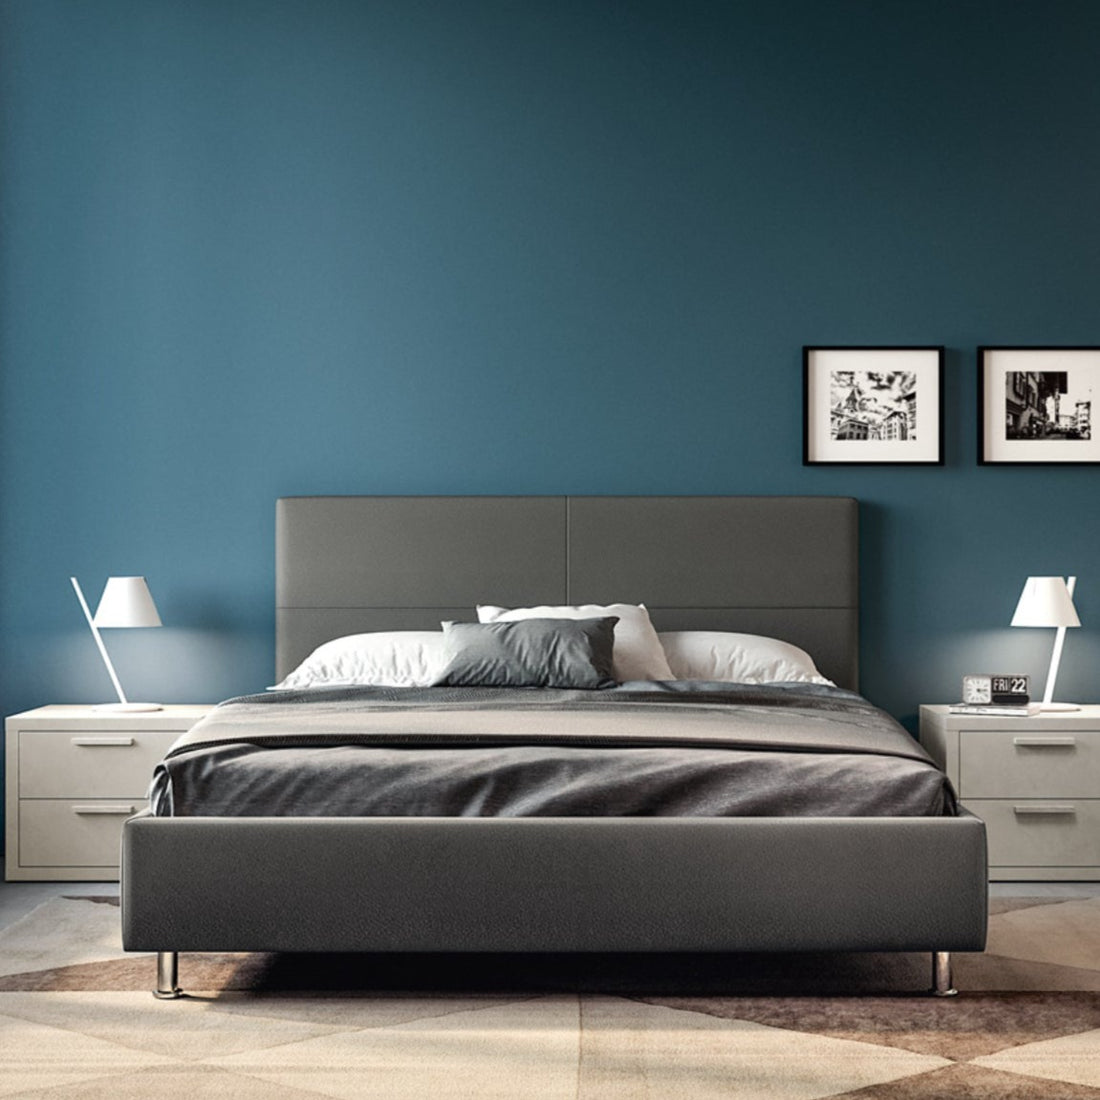 Elegant Ideas to get your Dreamy Bedroom